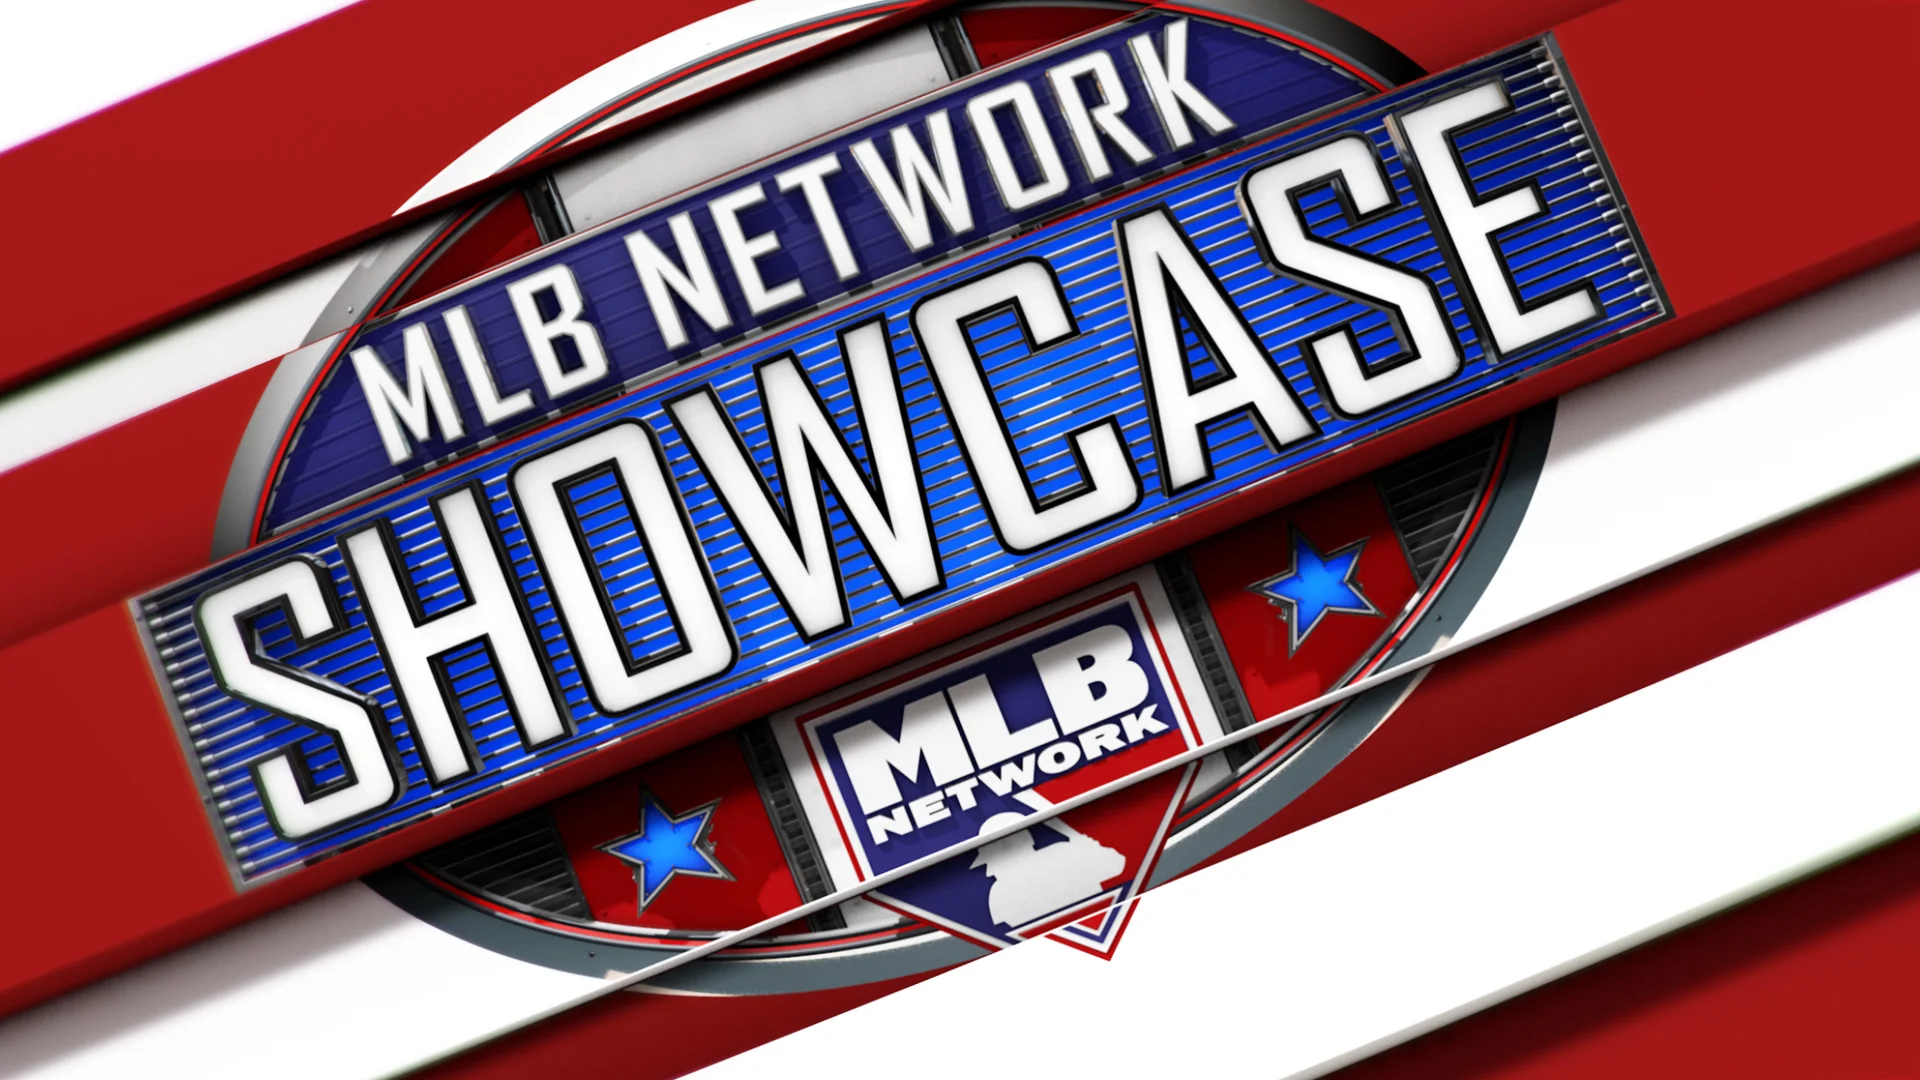 MLB Network Showcase Brings Back 'MLB Tonight Style' Format